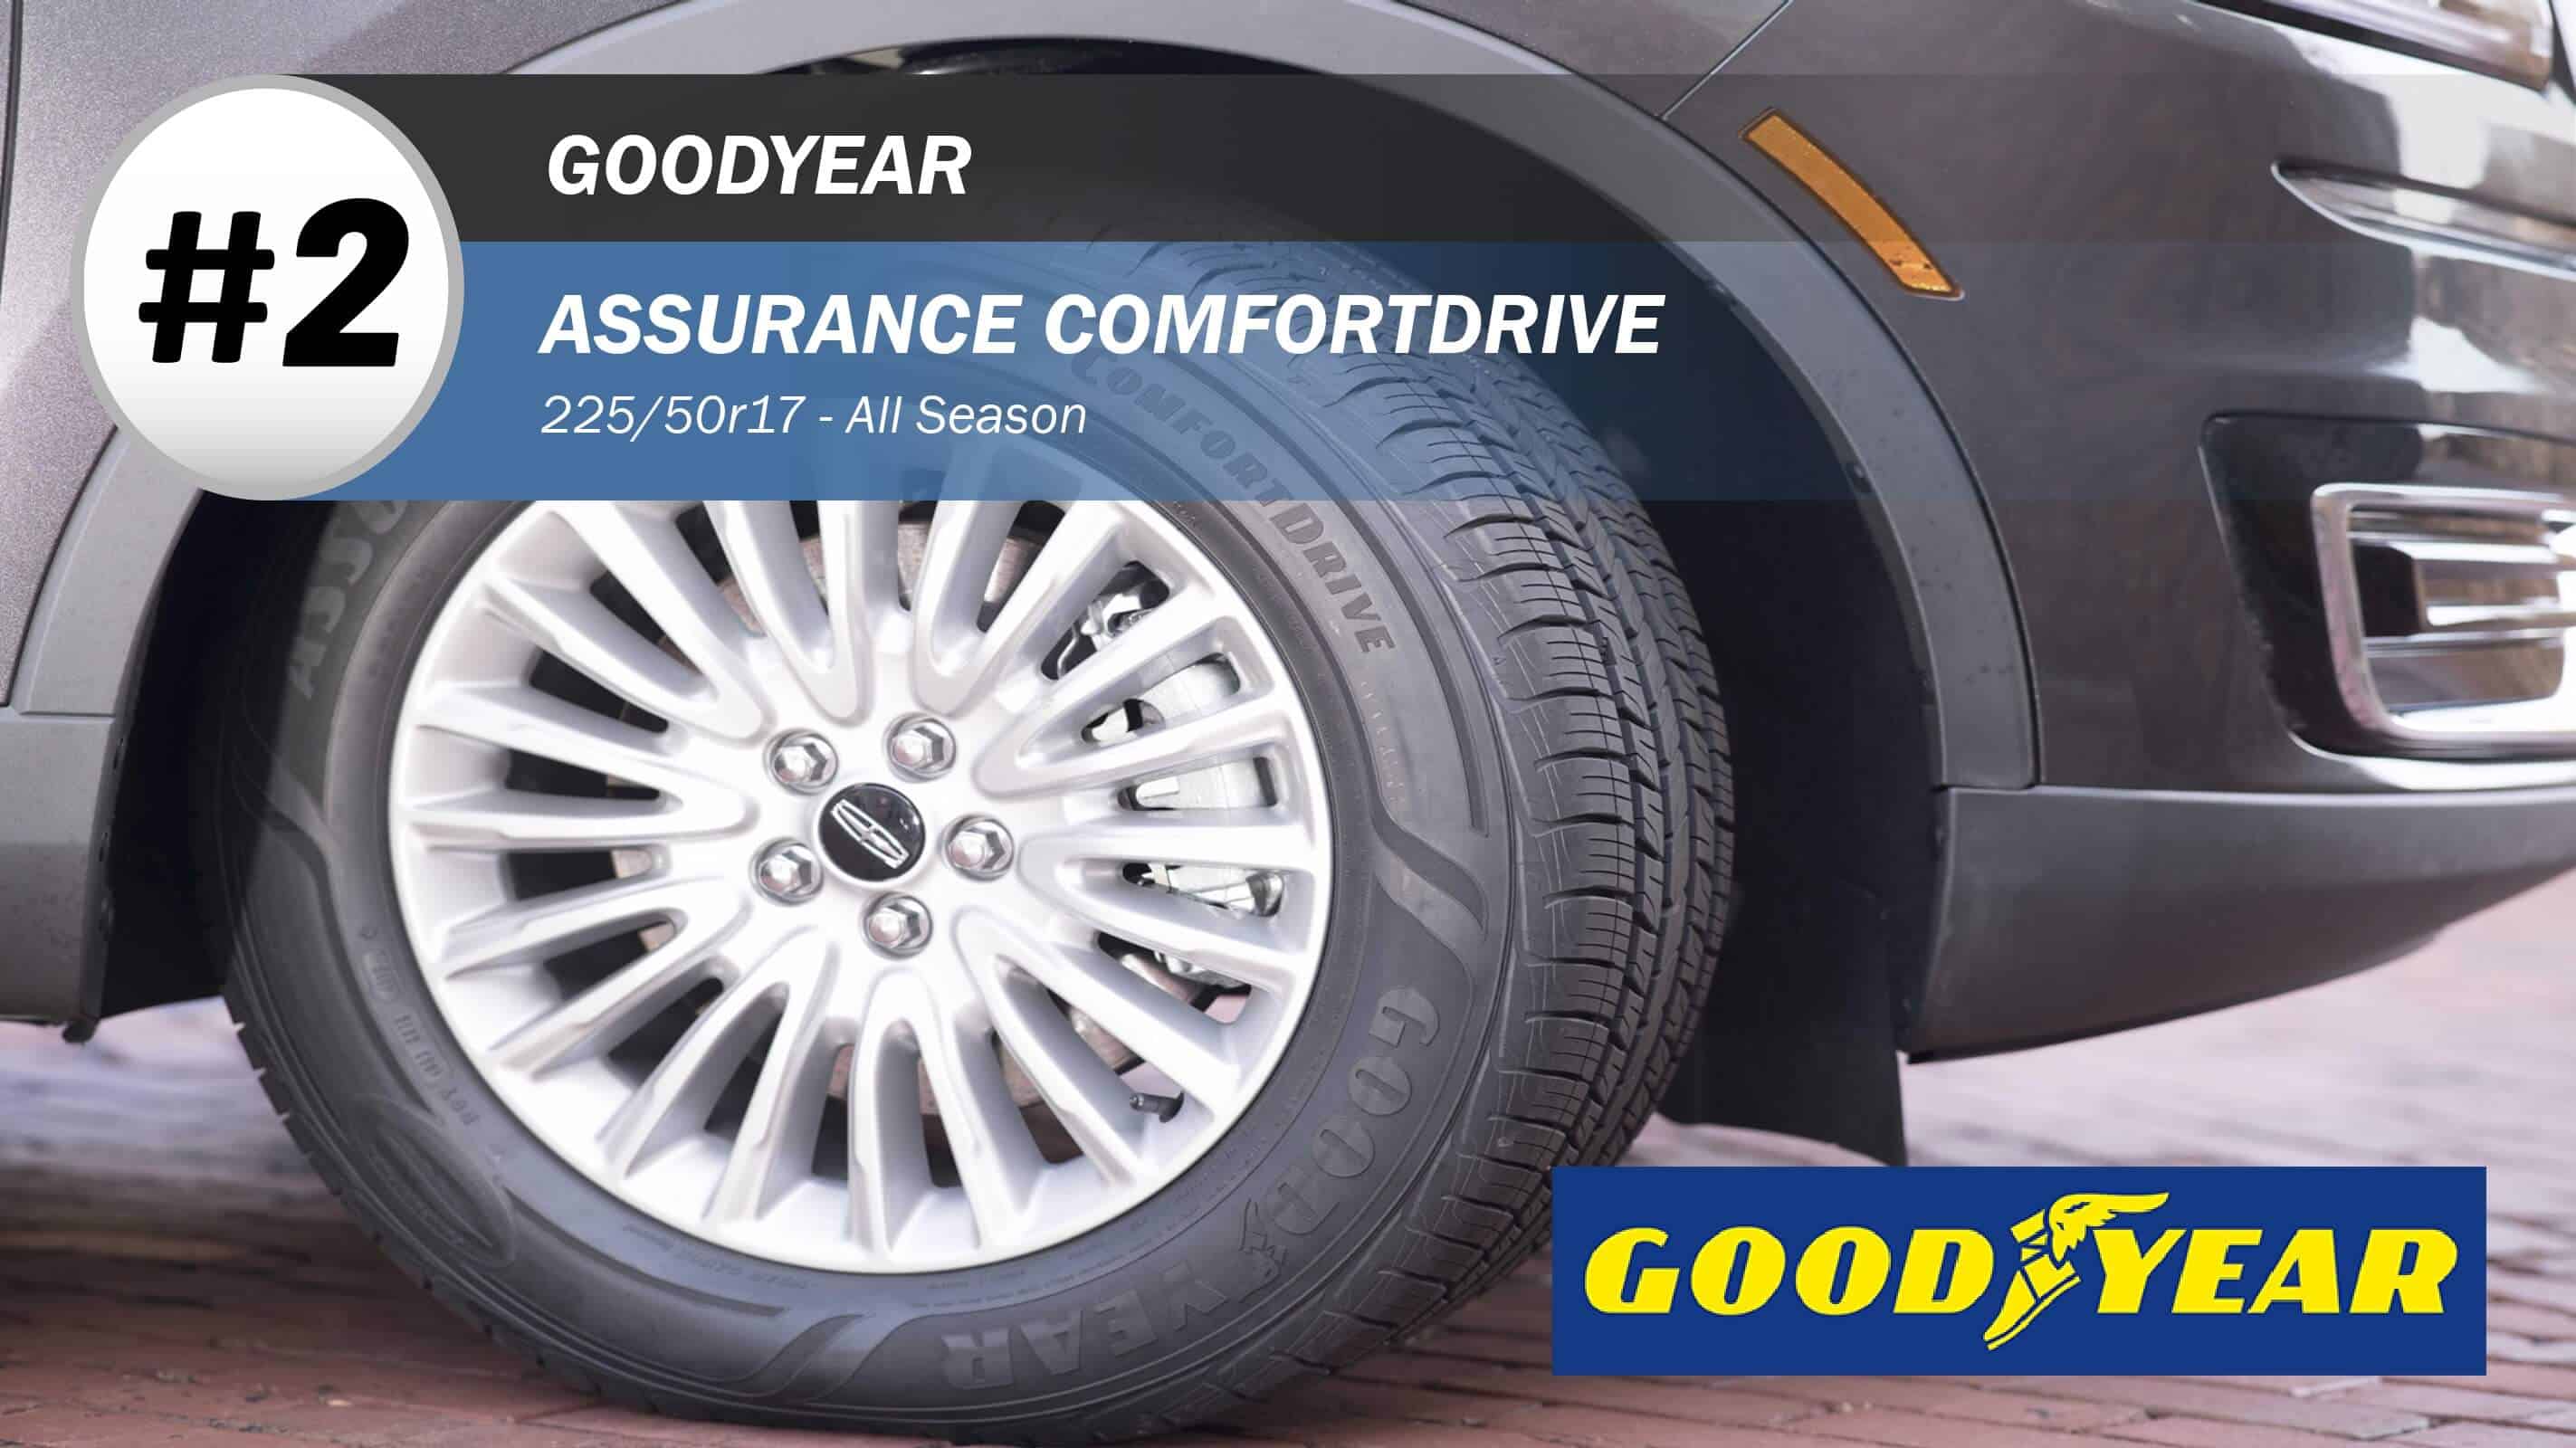 Top #2 All Season Tires: Goodyear Assurance Comfortdrive – 225/50R17